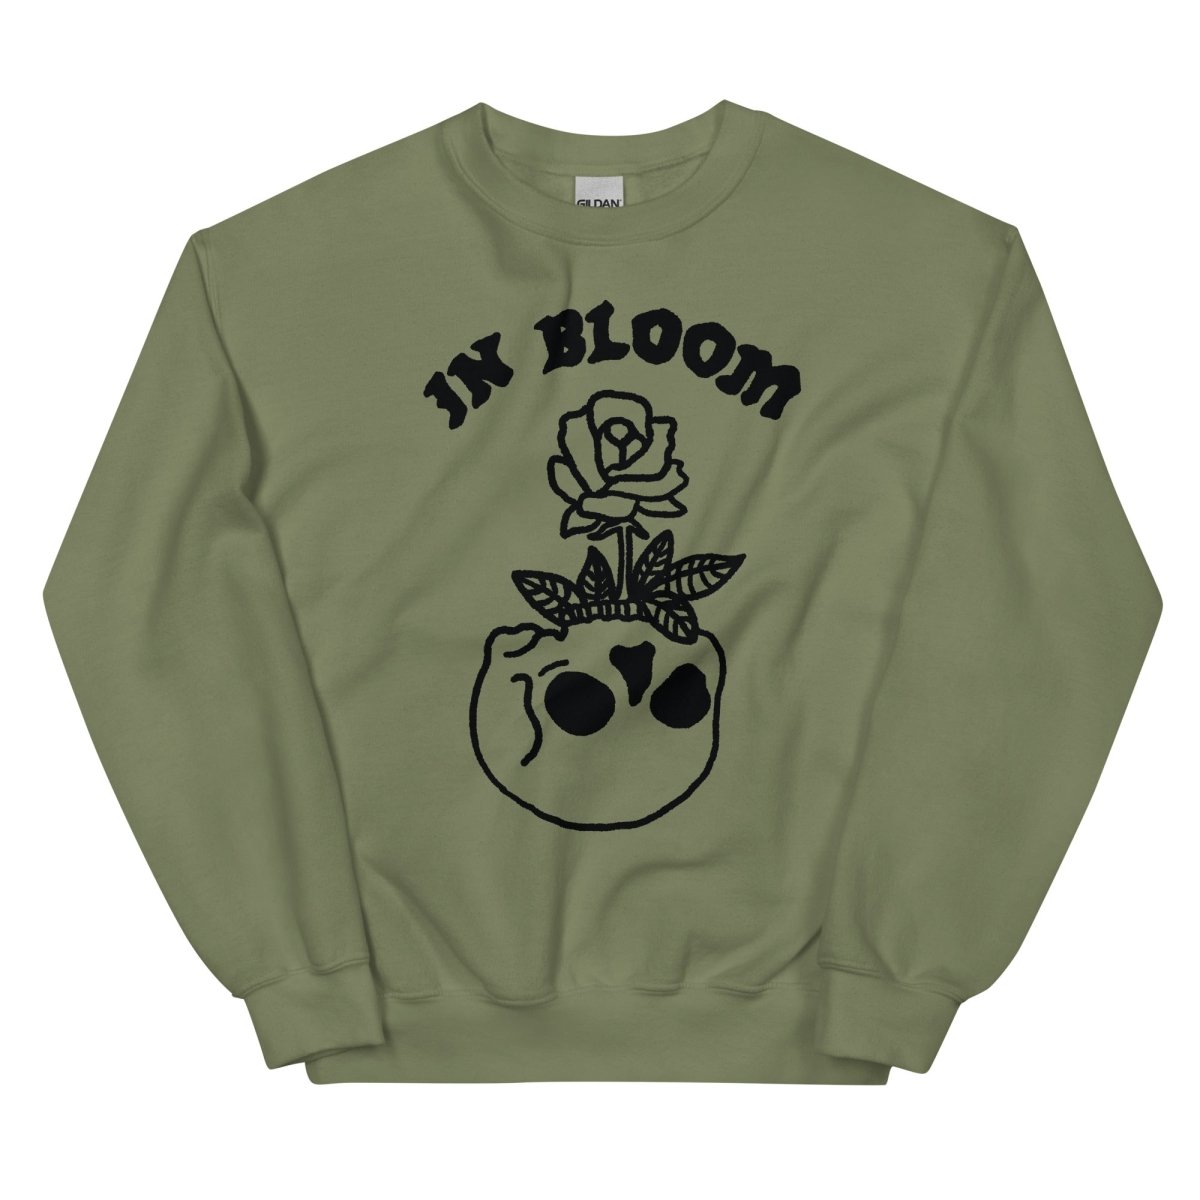 In Bloom military green sweatshirt - Sweatshirt - Pretty Bad Co.